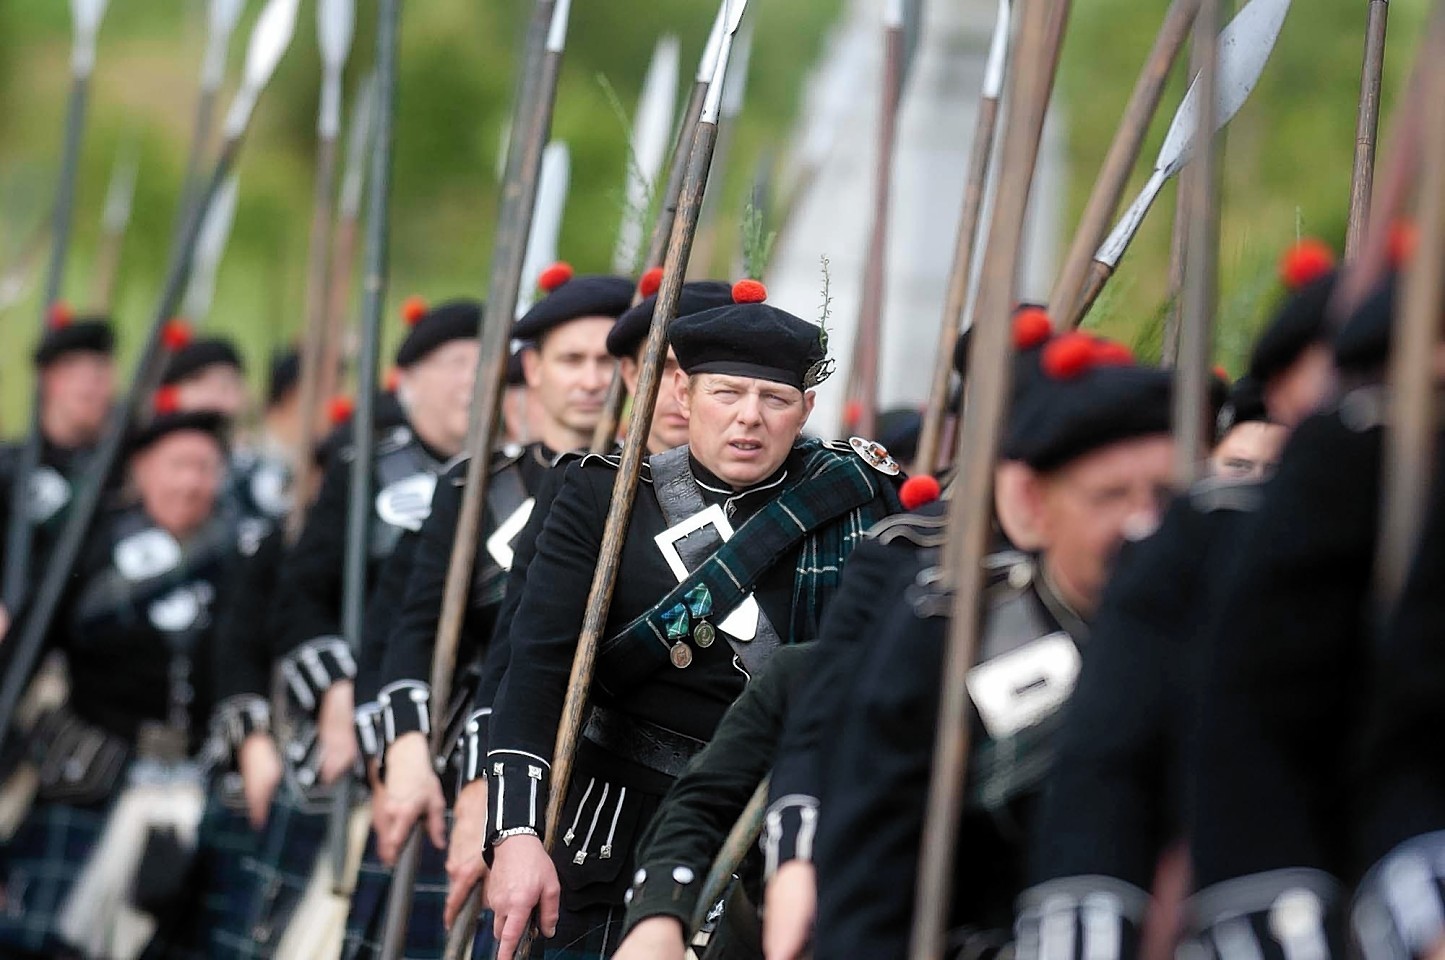 The Lonach Highlanders